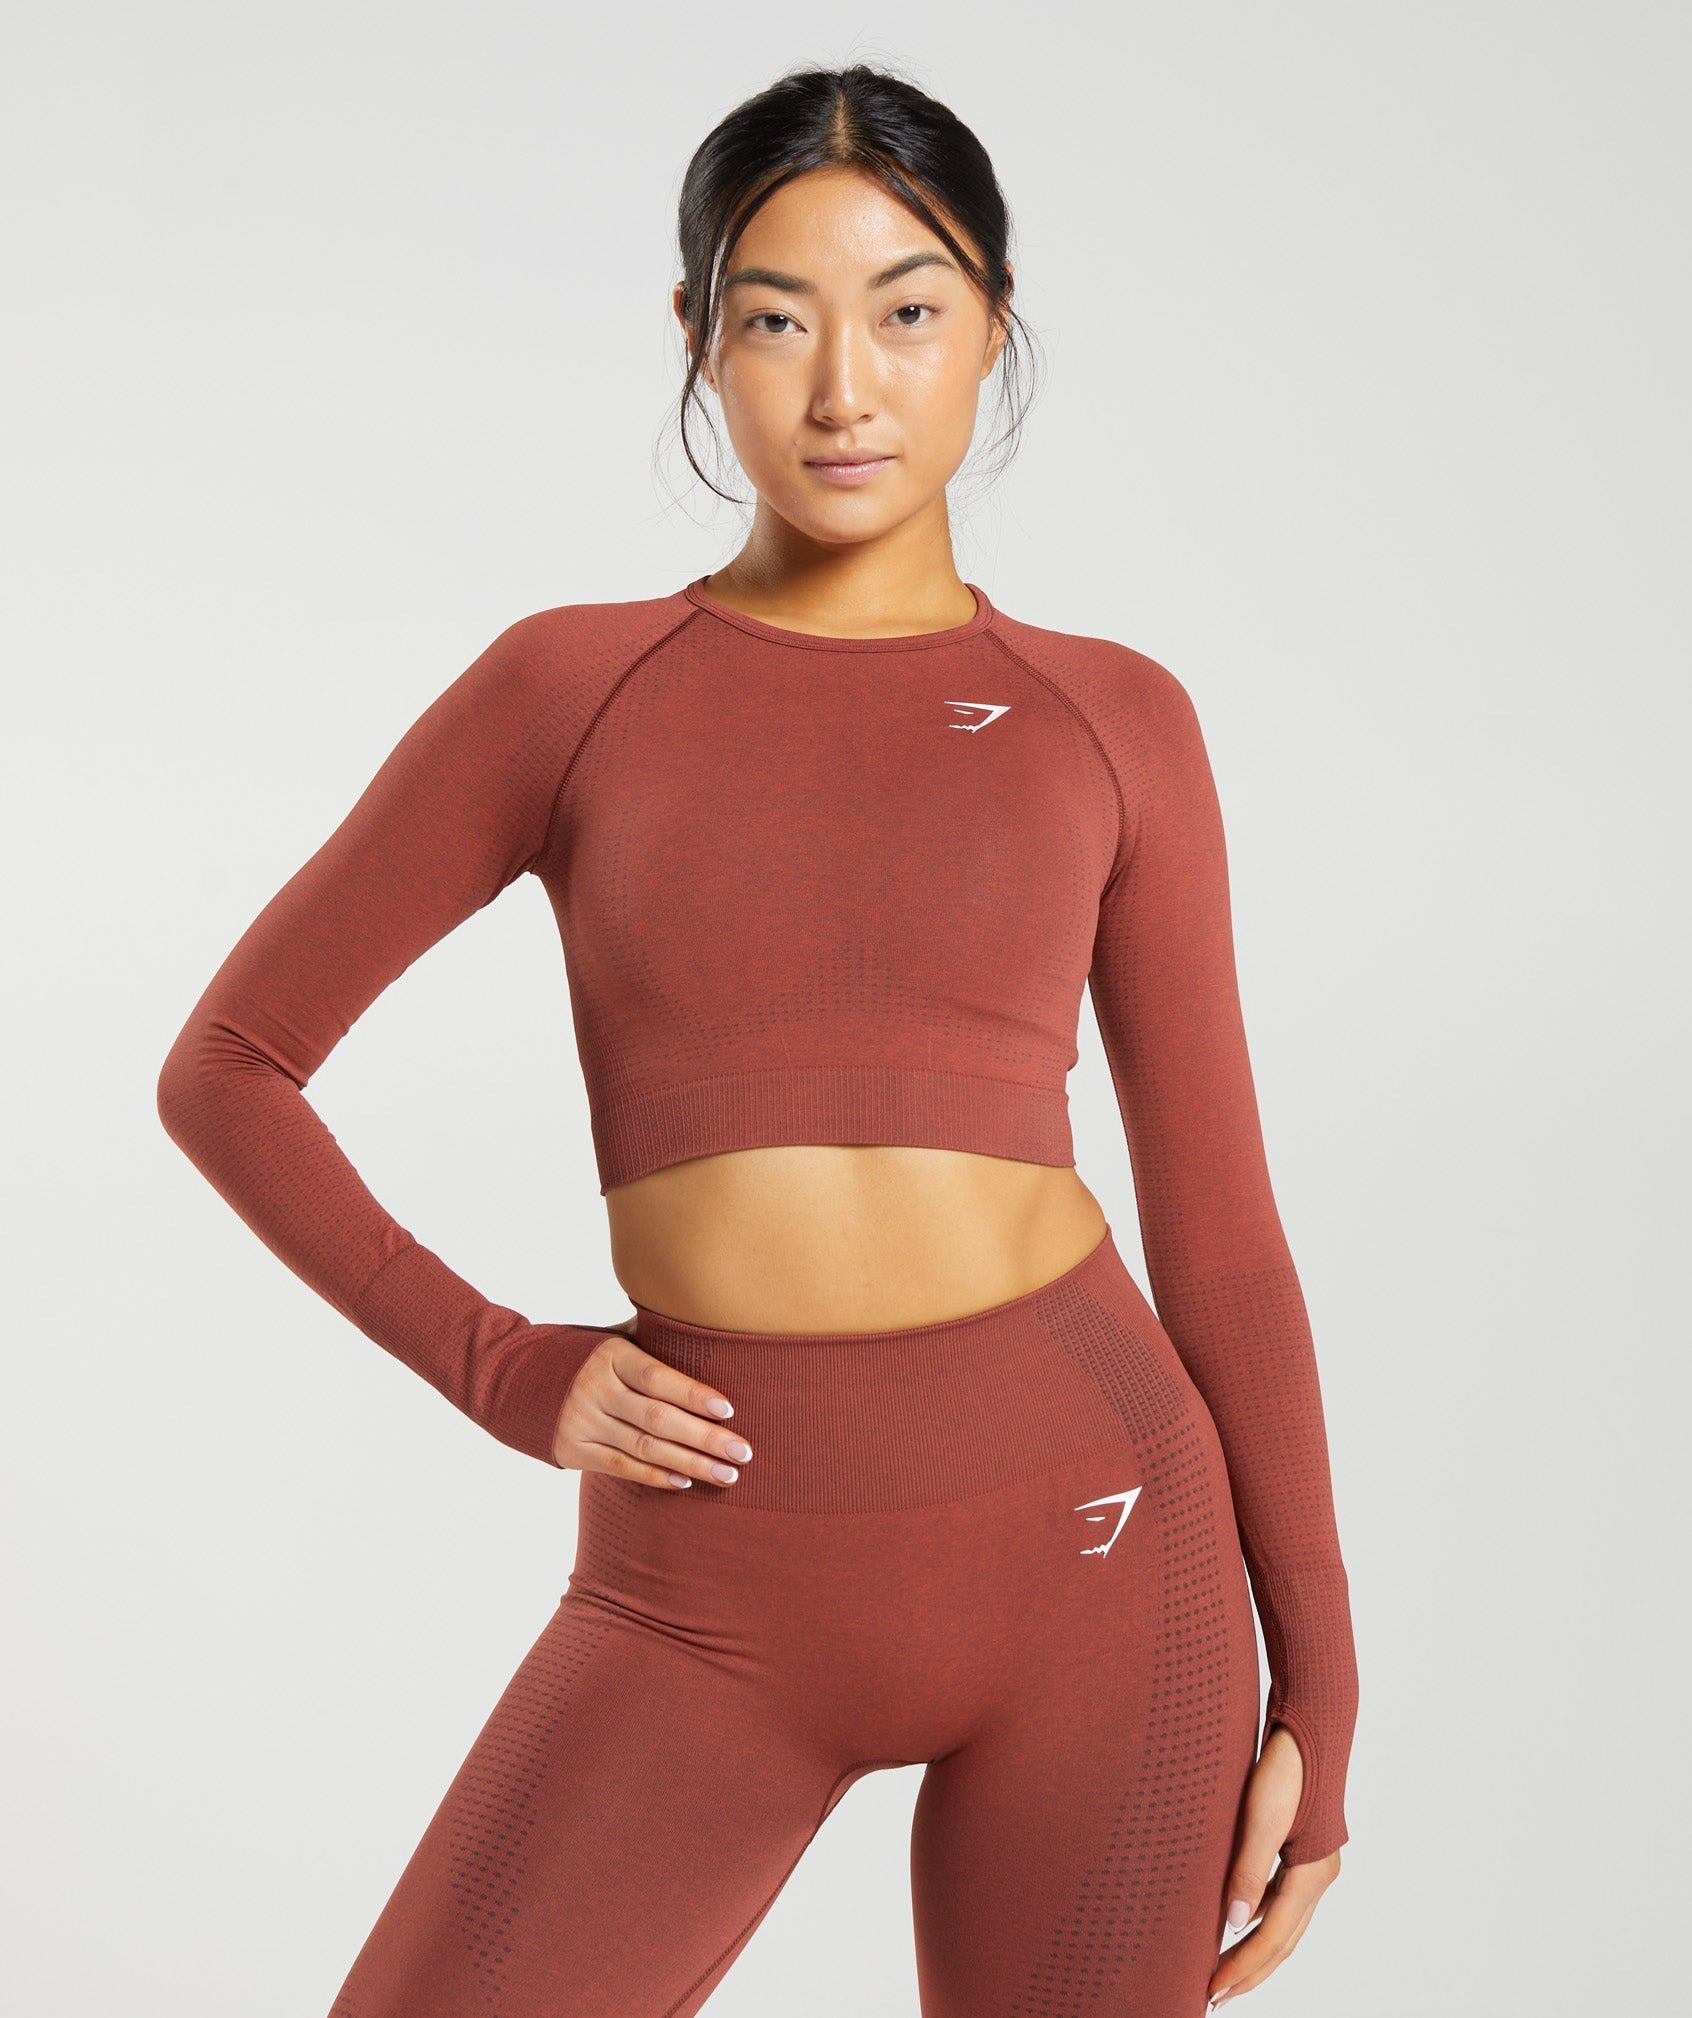 Gymshark Fraction Crop Top Women's Small Dark Red Workout Shirt Stretch  Cotton